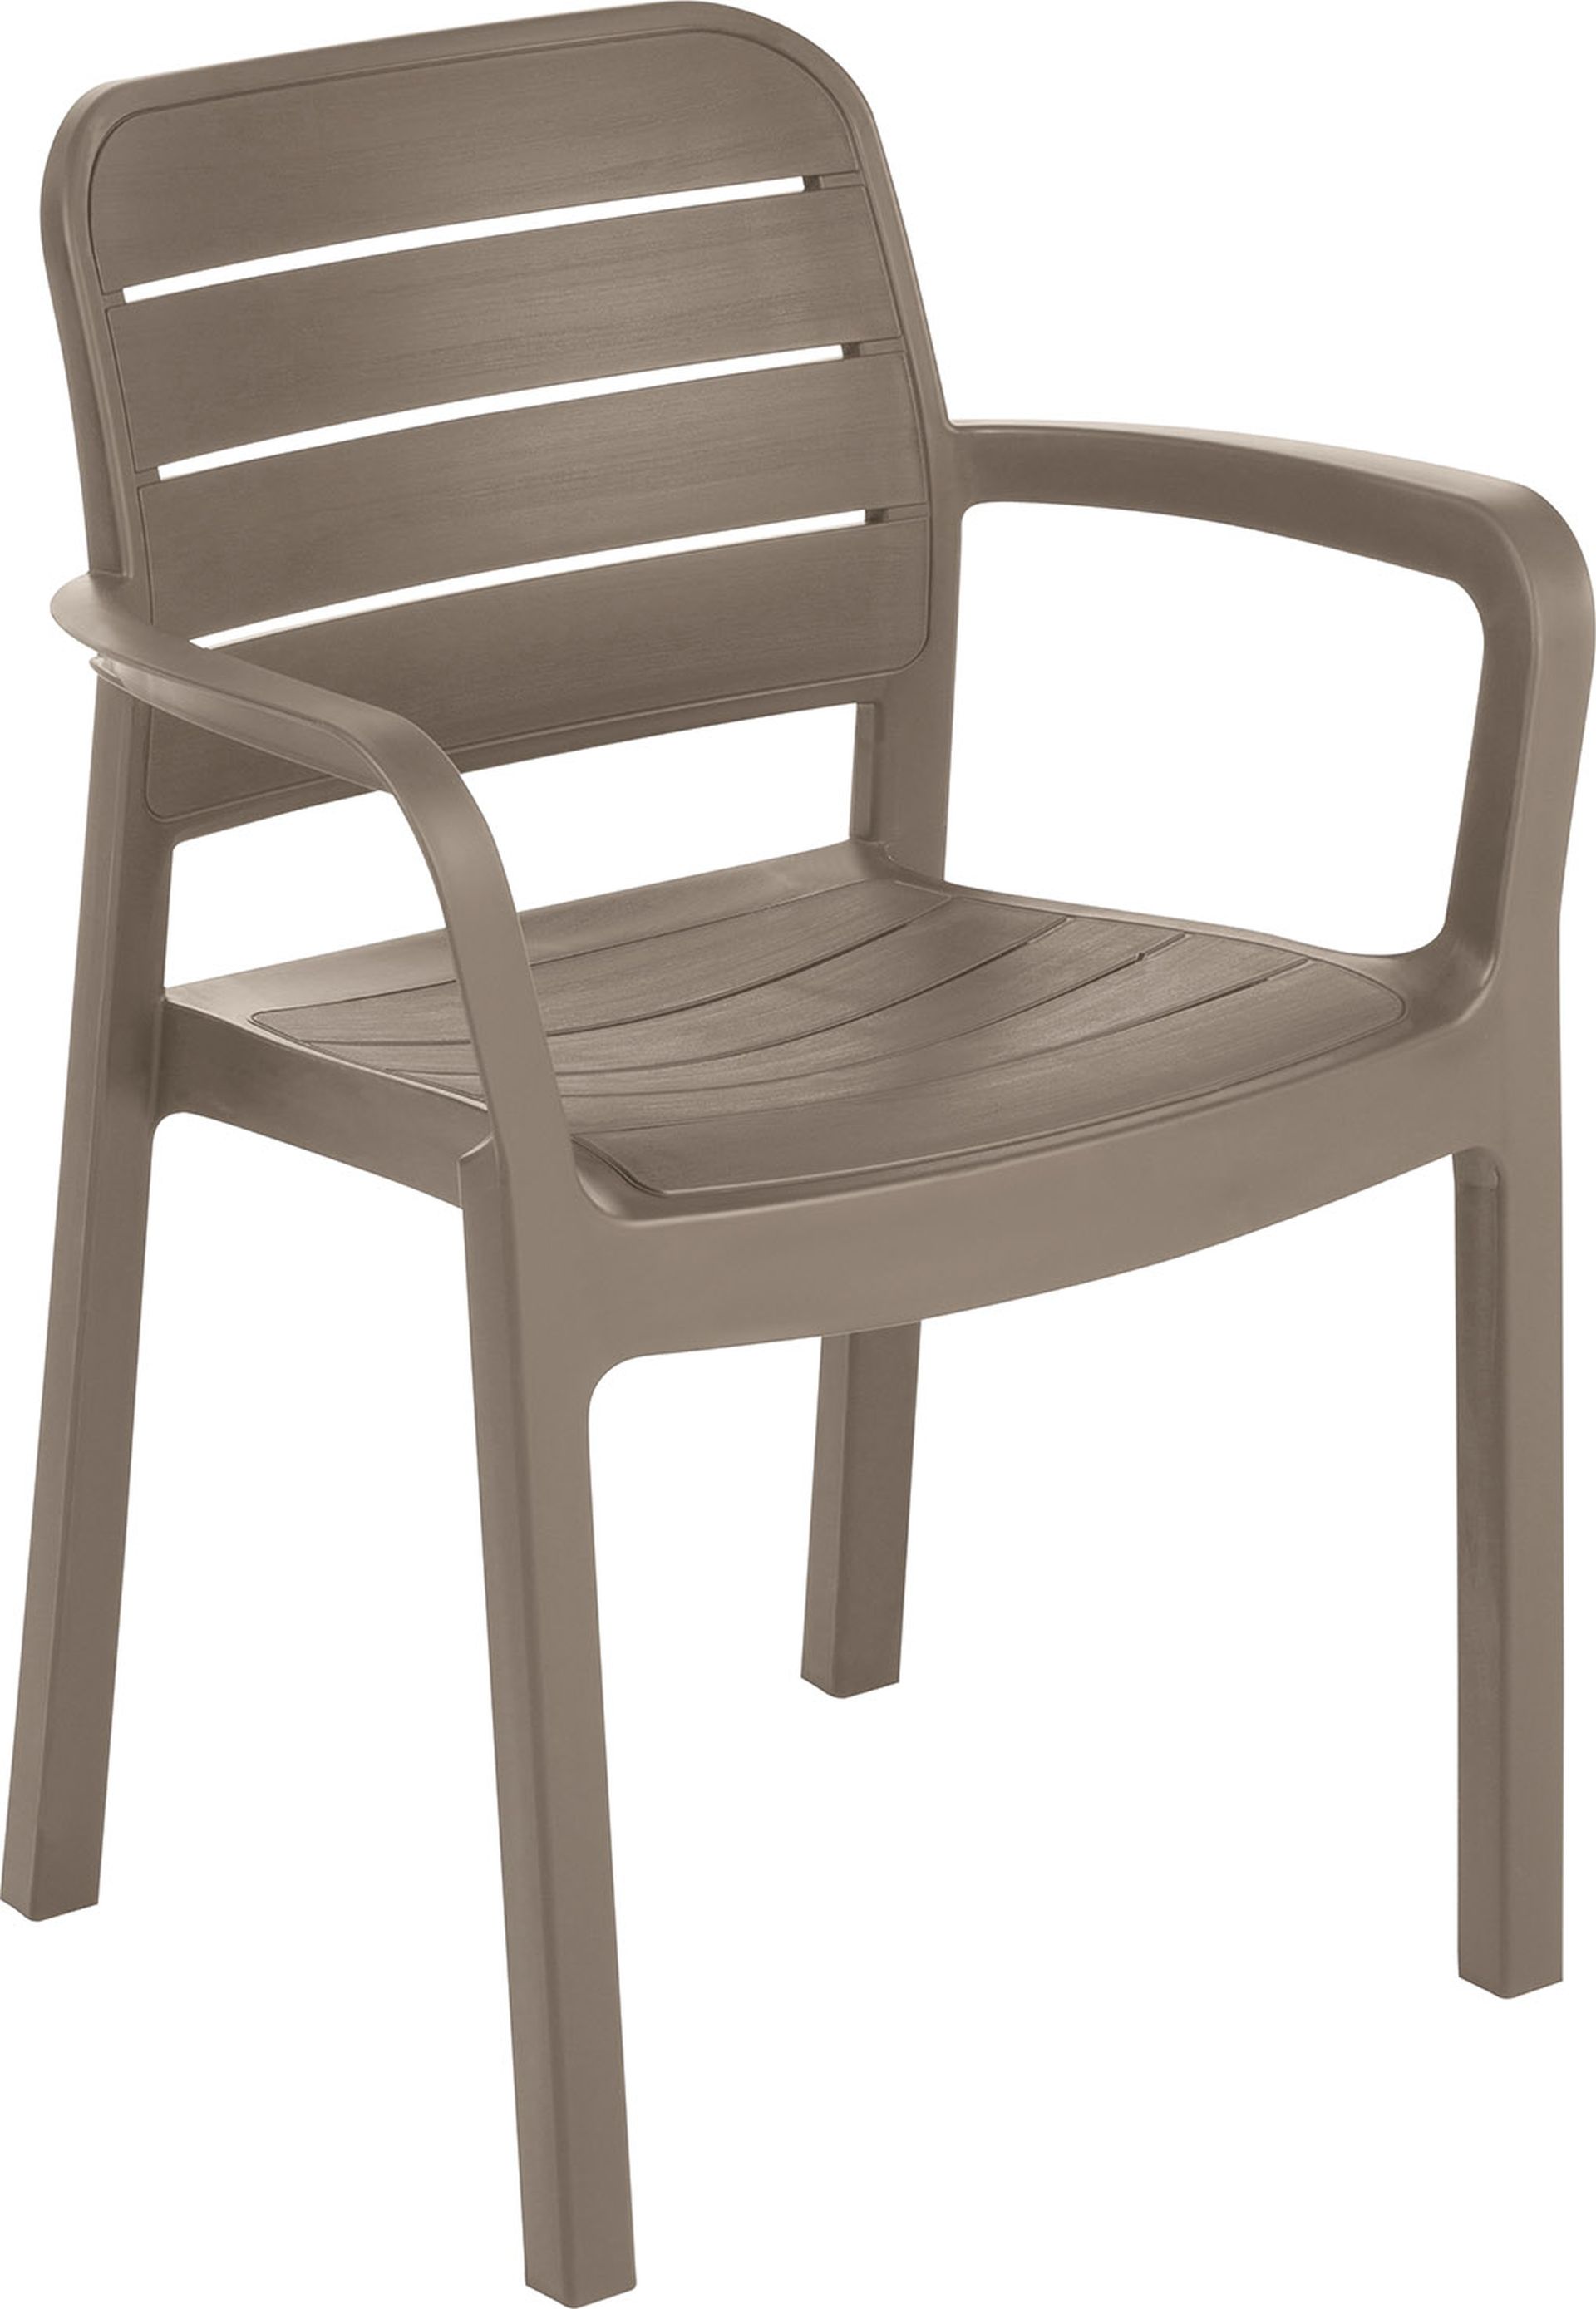 ALLIBERT TISARA Zahradní židle, 53 x 58 x 83 cm, cappuccino 17199557